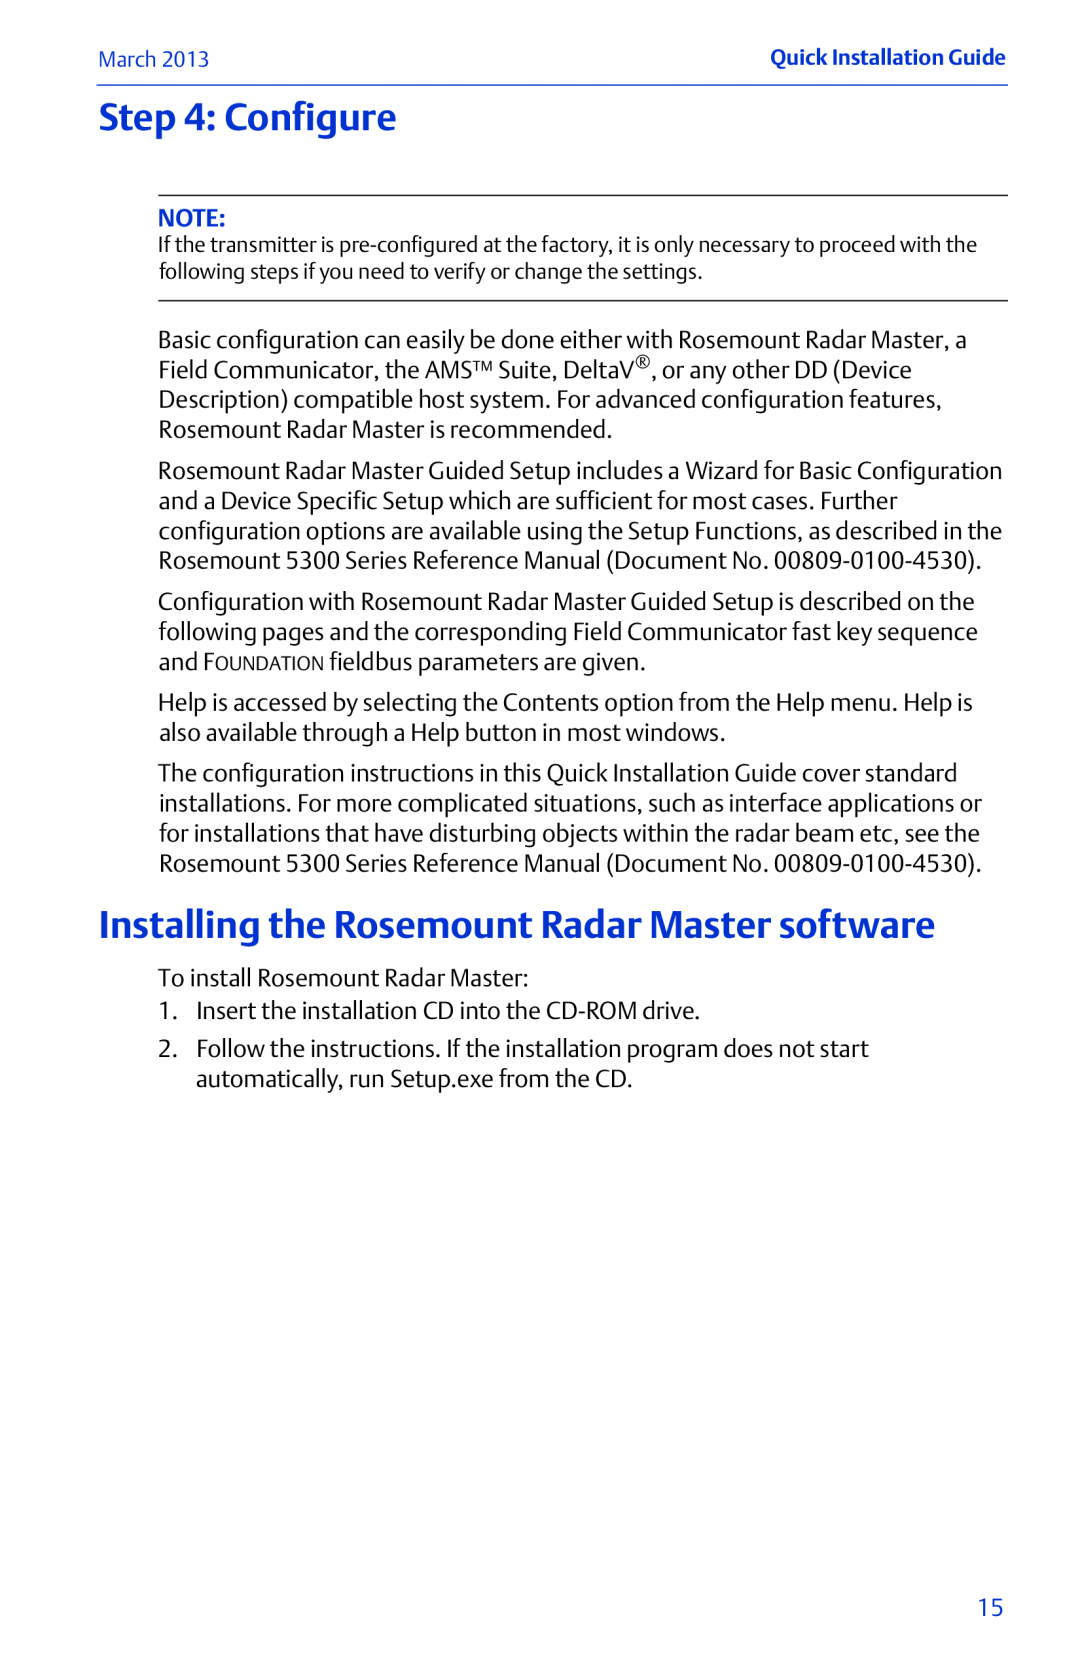 Emerson 00825-0100-4530 Rev EC manual Configure, Installing the Rosemount Radar Master software 